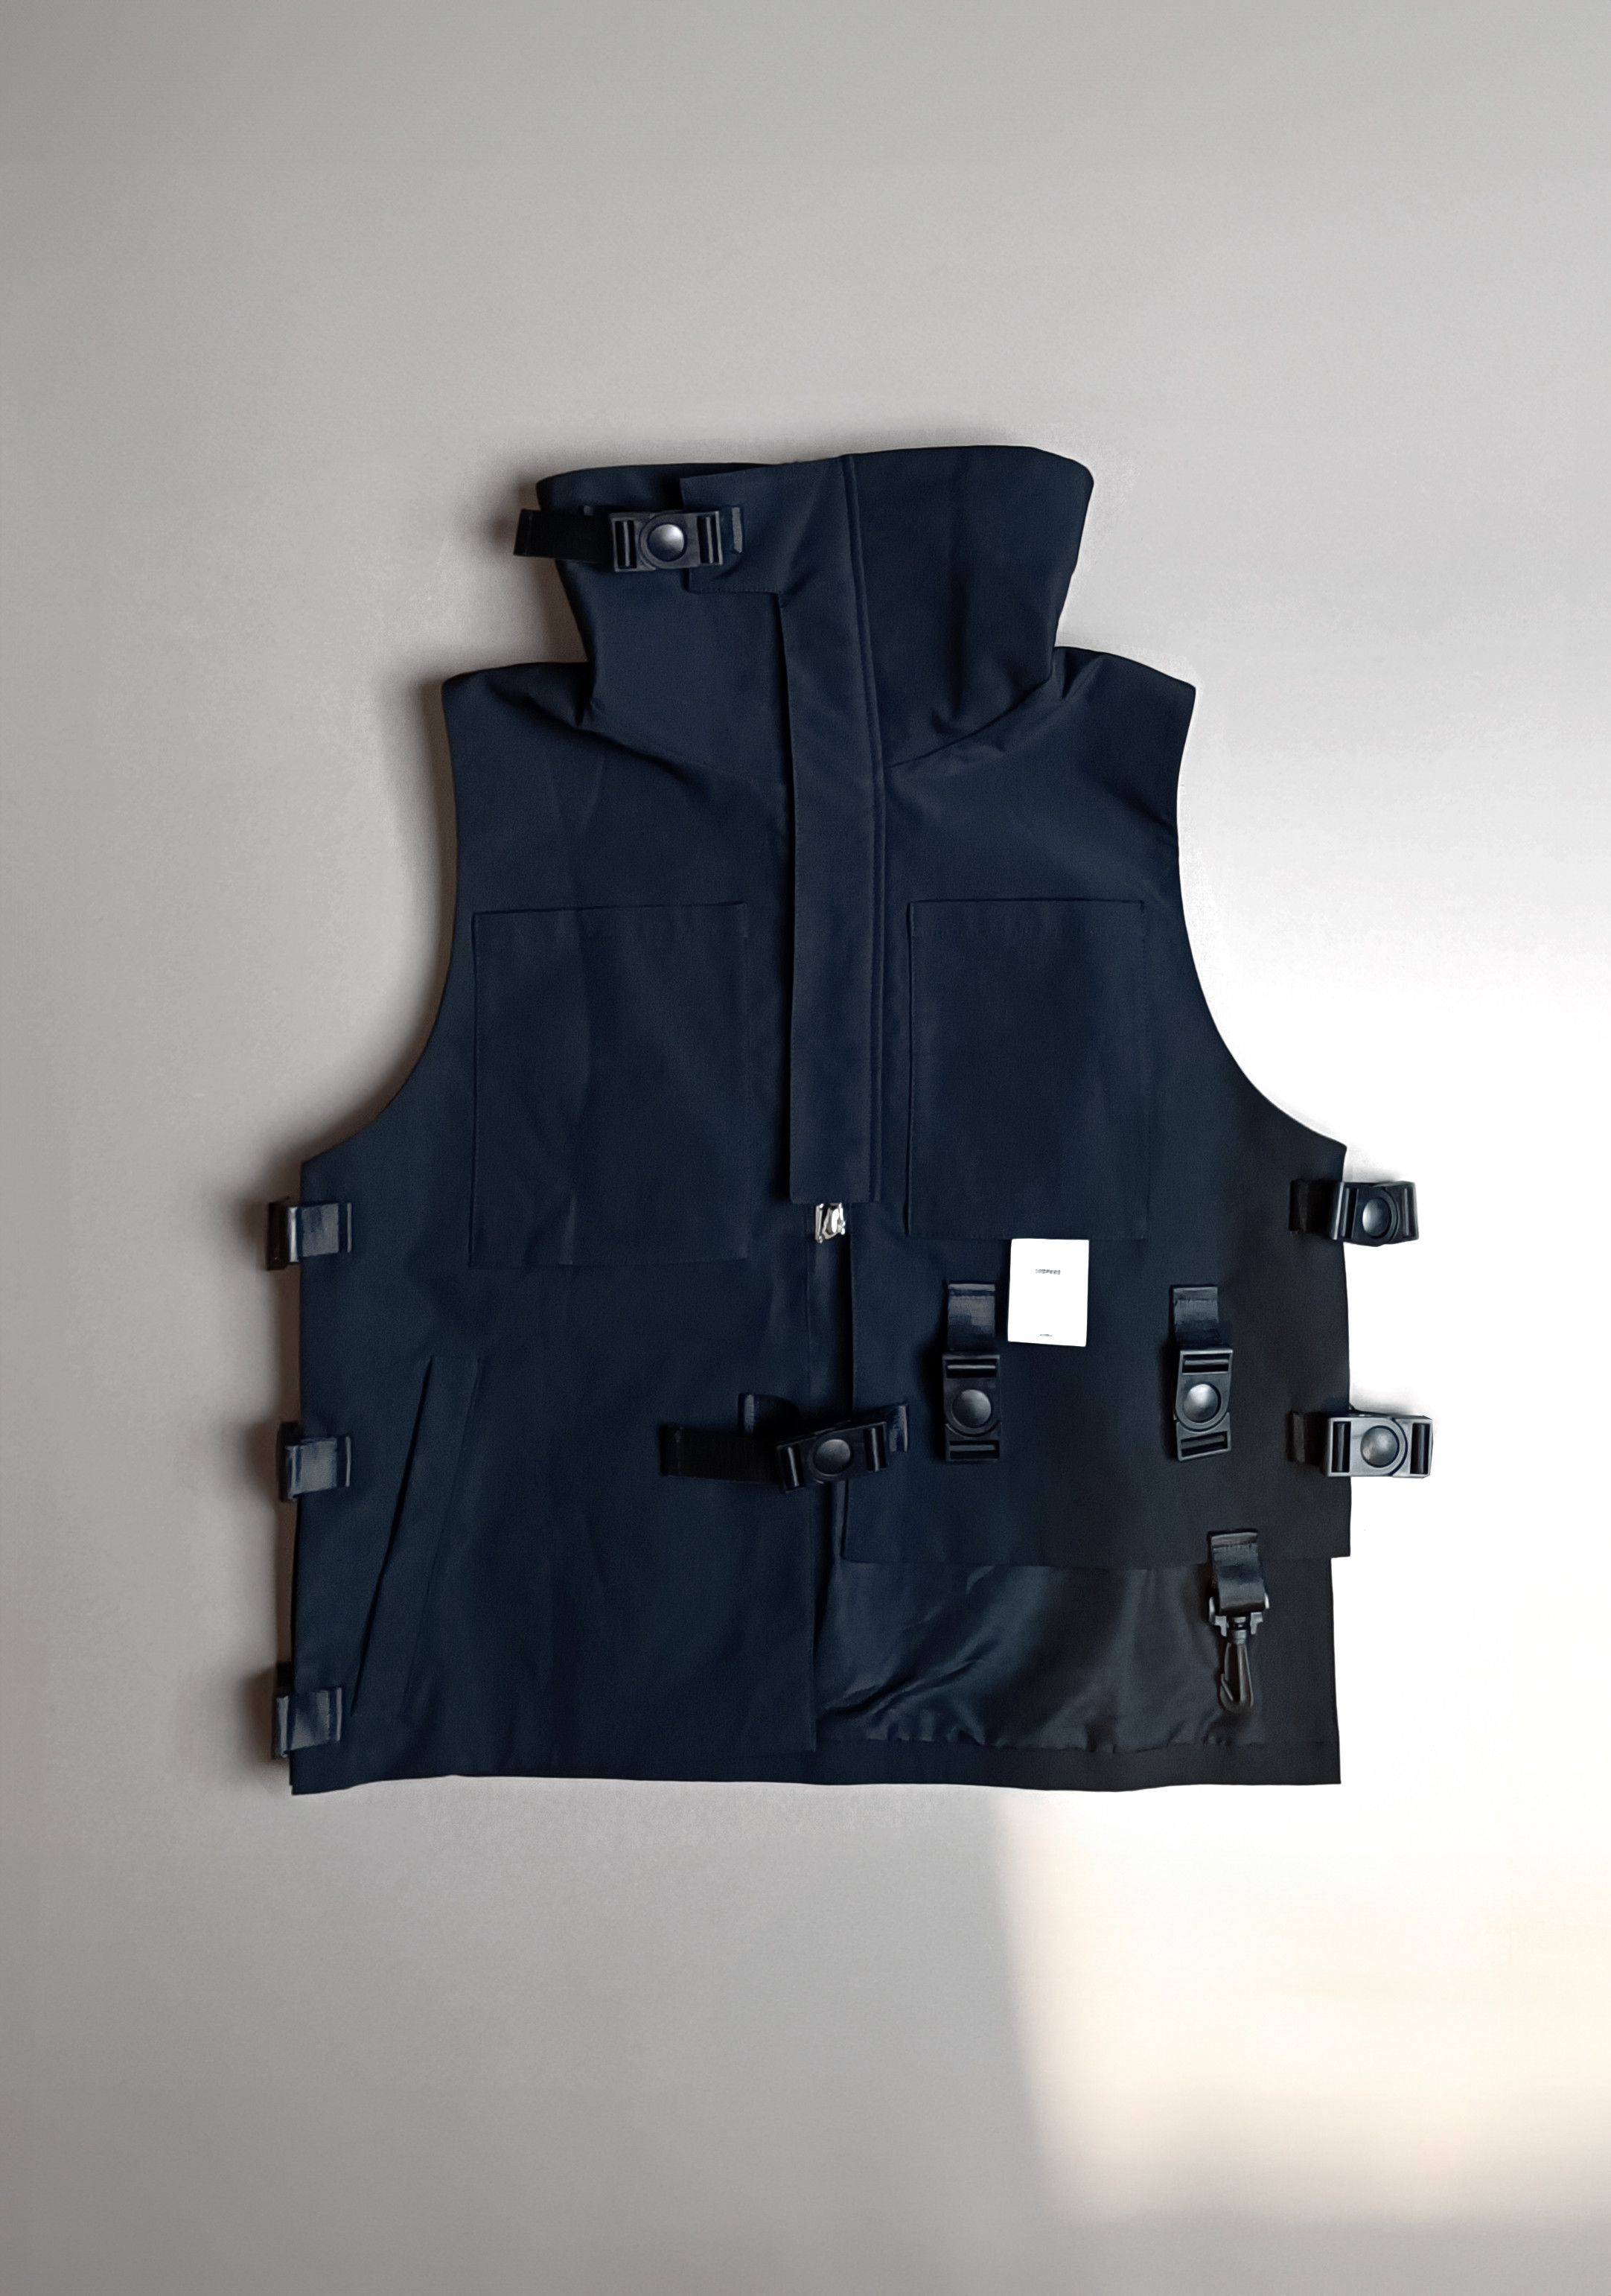 Avant Garde - Avant-Garde Adjustable Tactical Vest by ONSPEED - 4